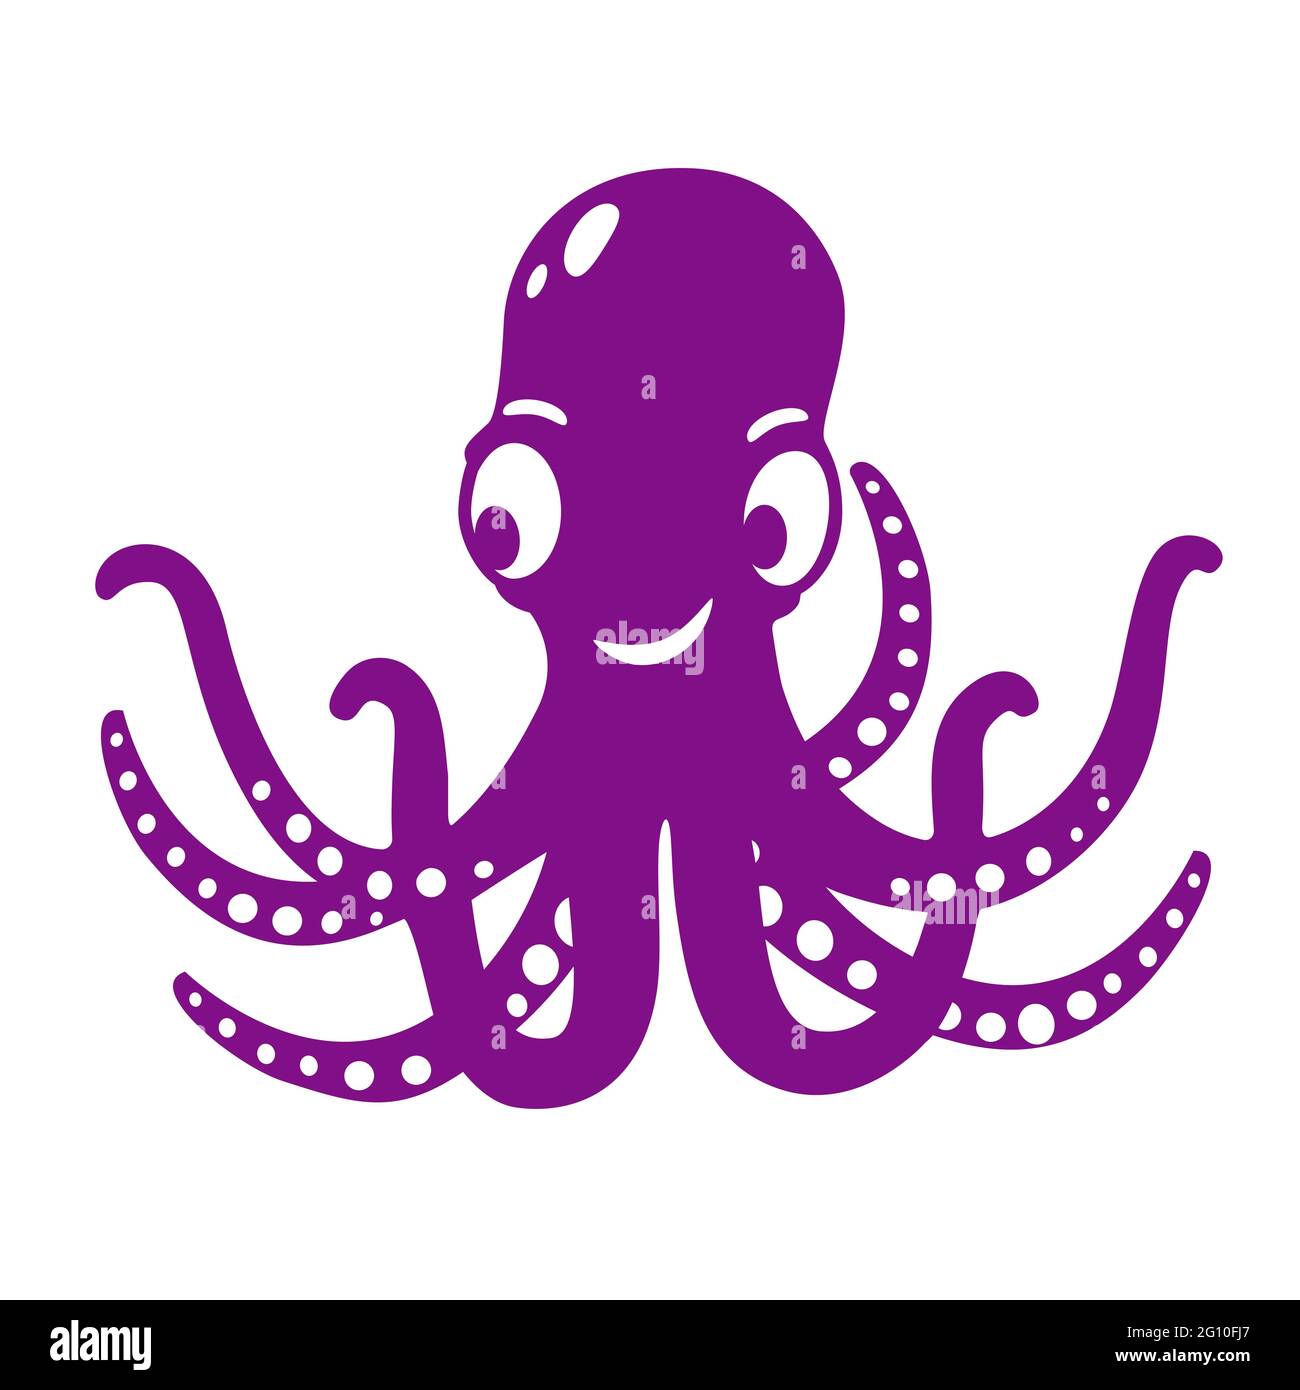 Octopus cartoon. Silhouette vector. Isolated illustration. Marine animal. Stock Vector